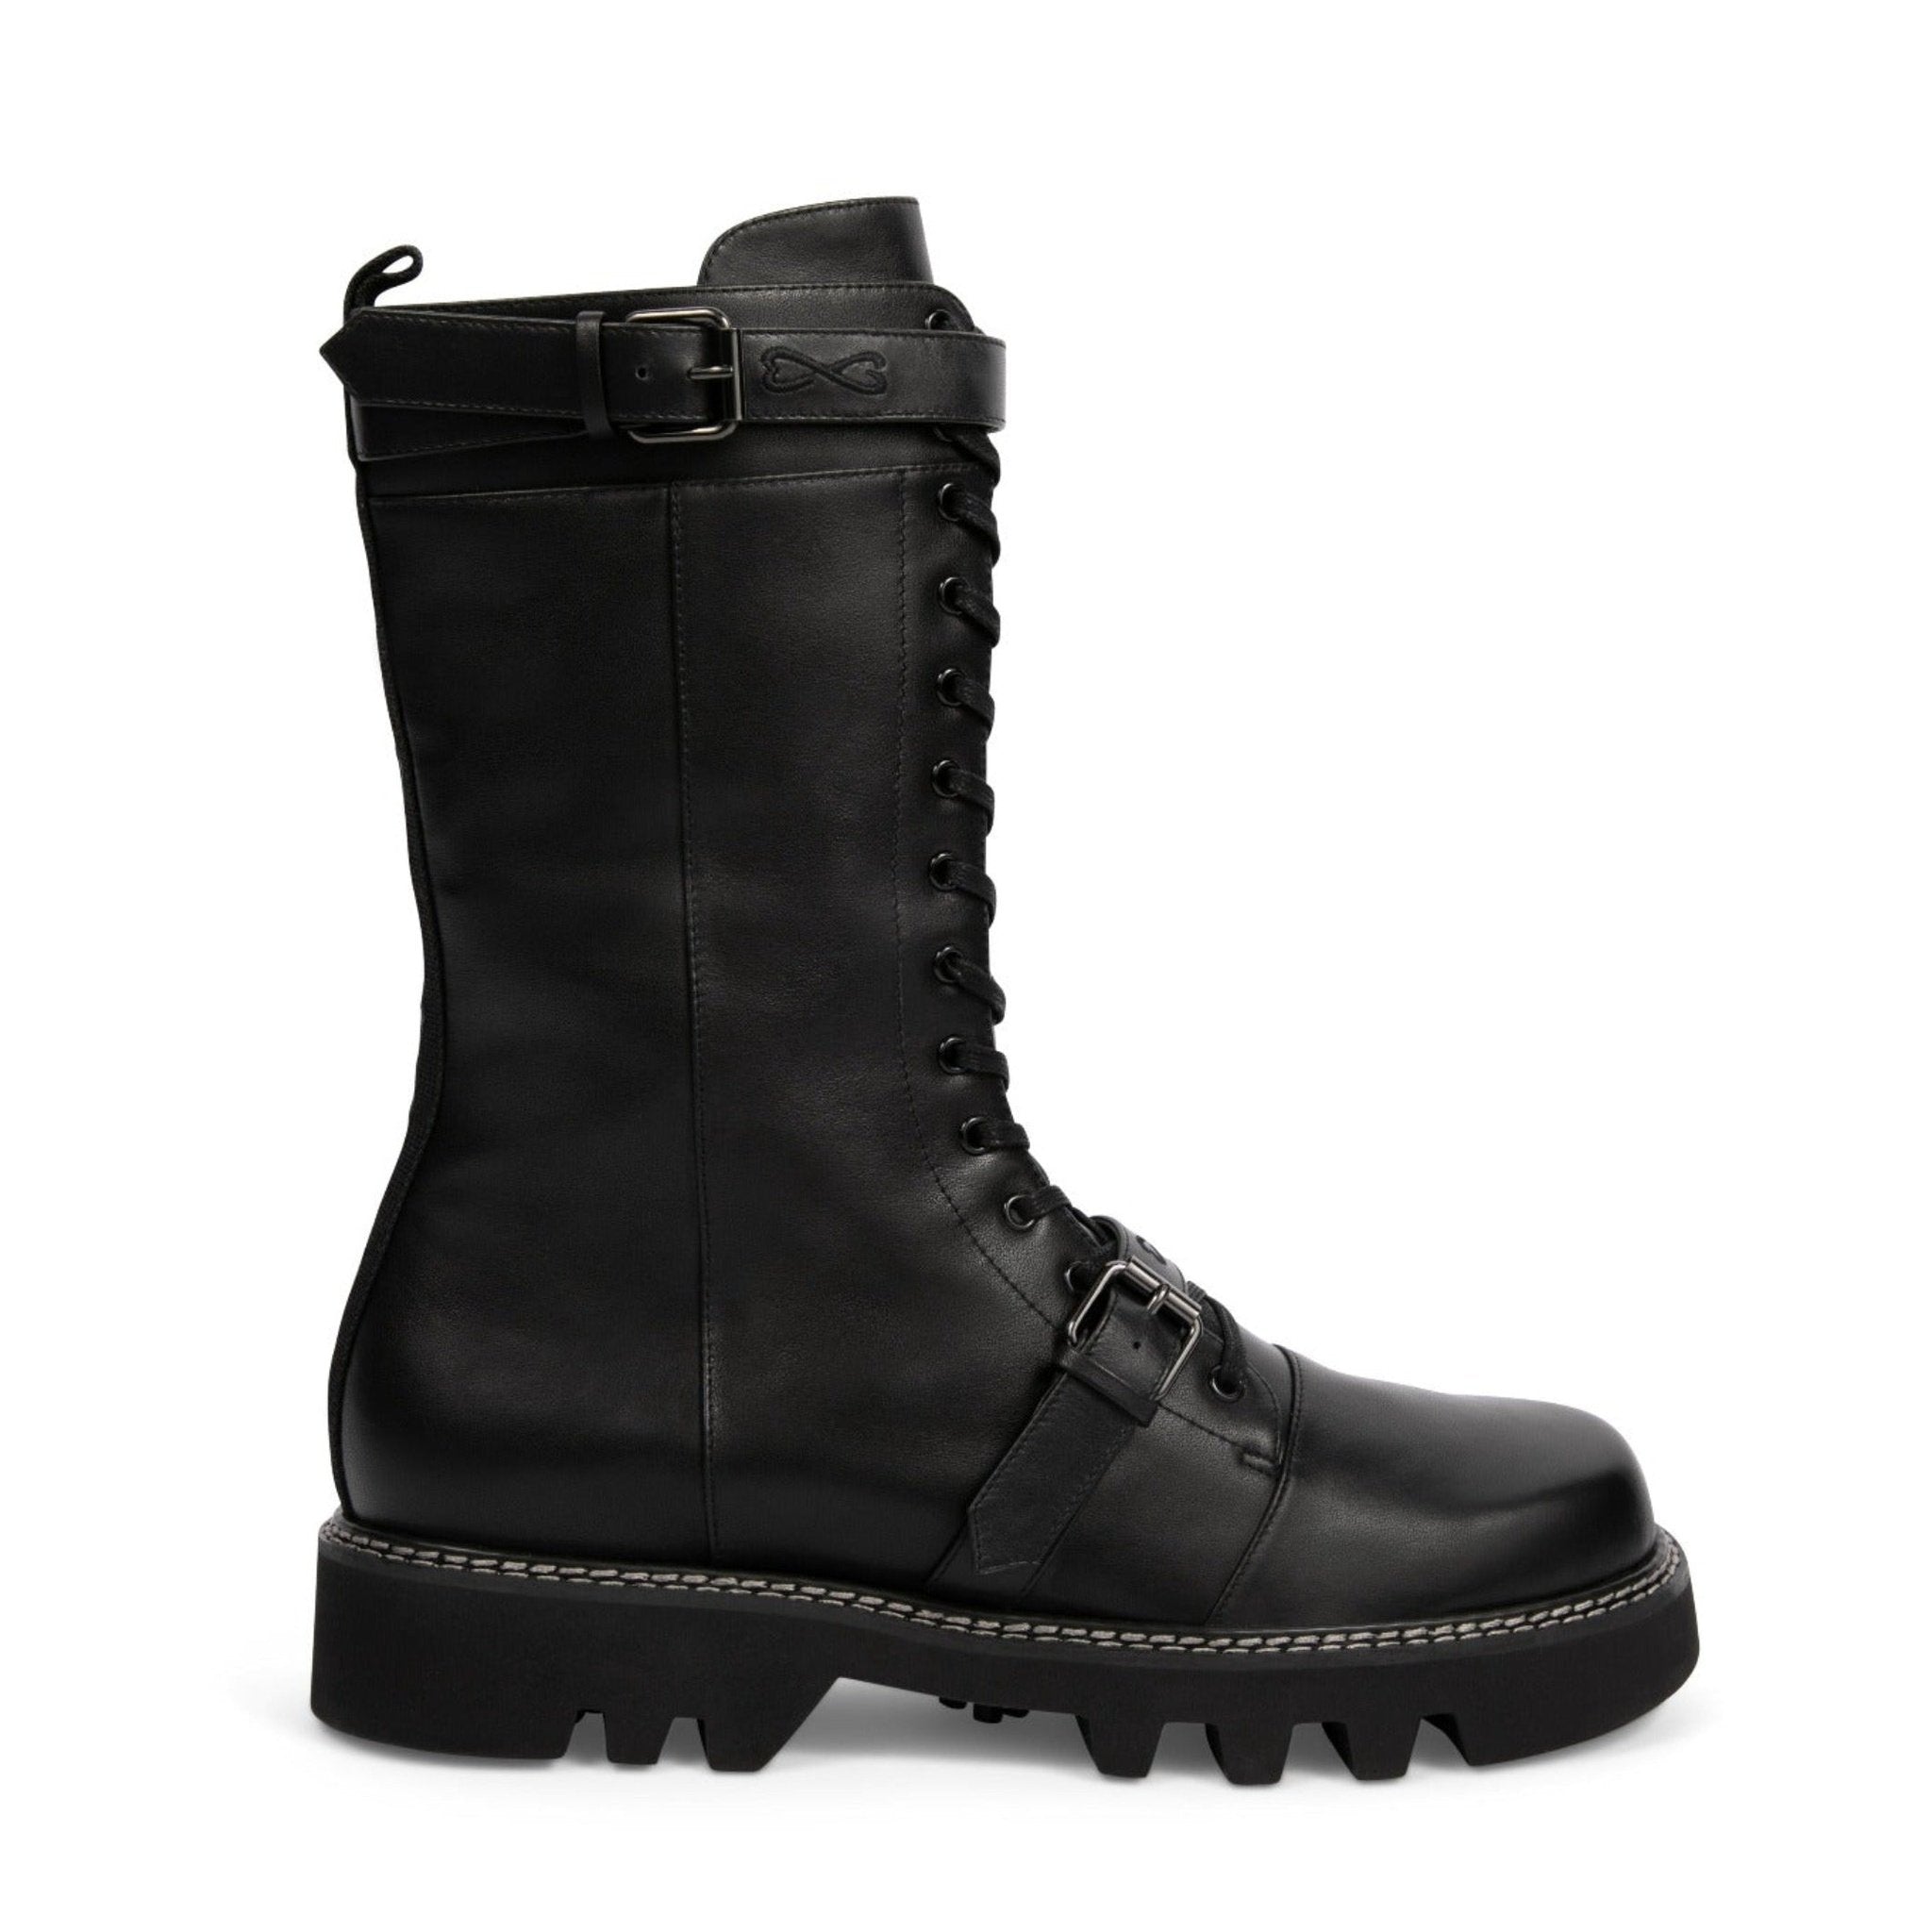 black leather combat boot large sizes